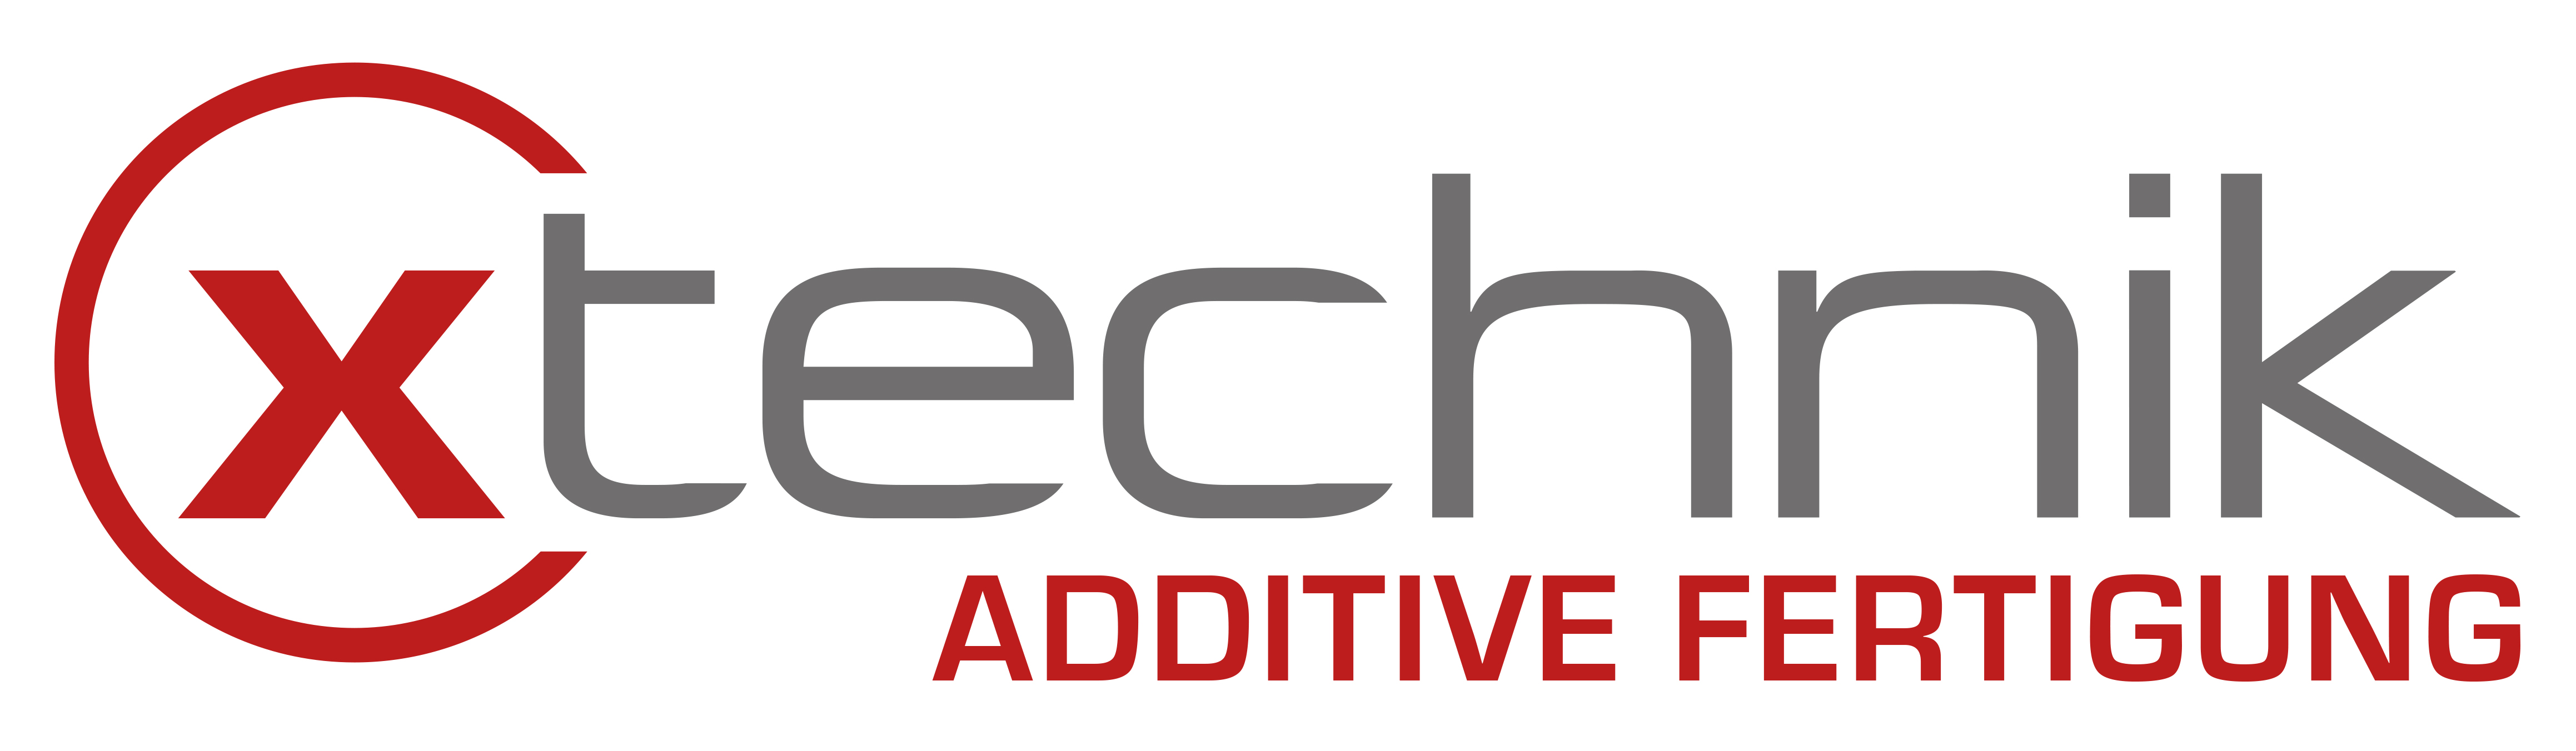 x-technik Additive Fertigung Logo